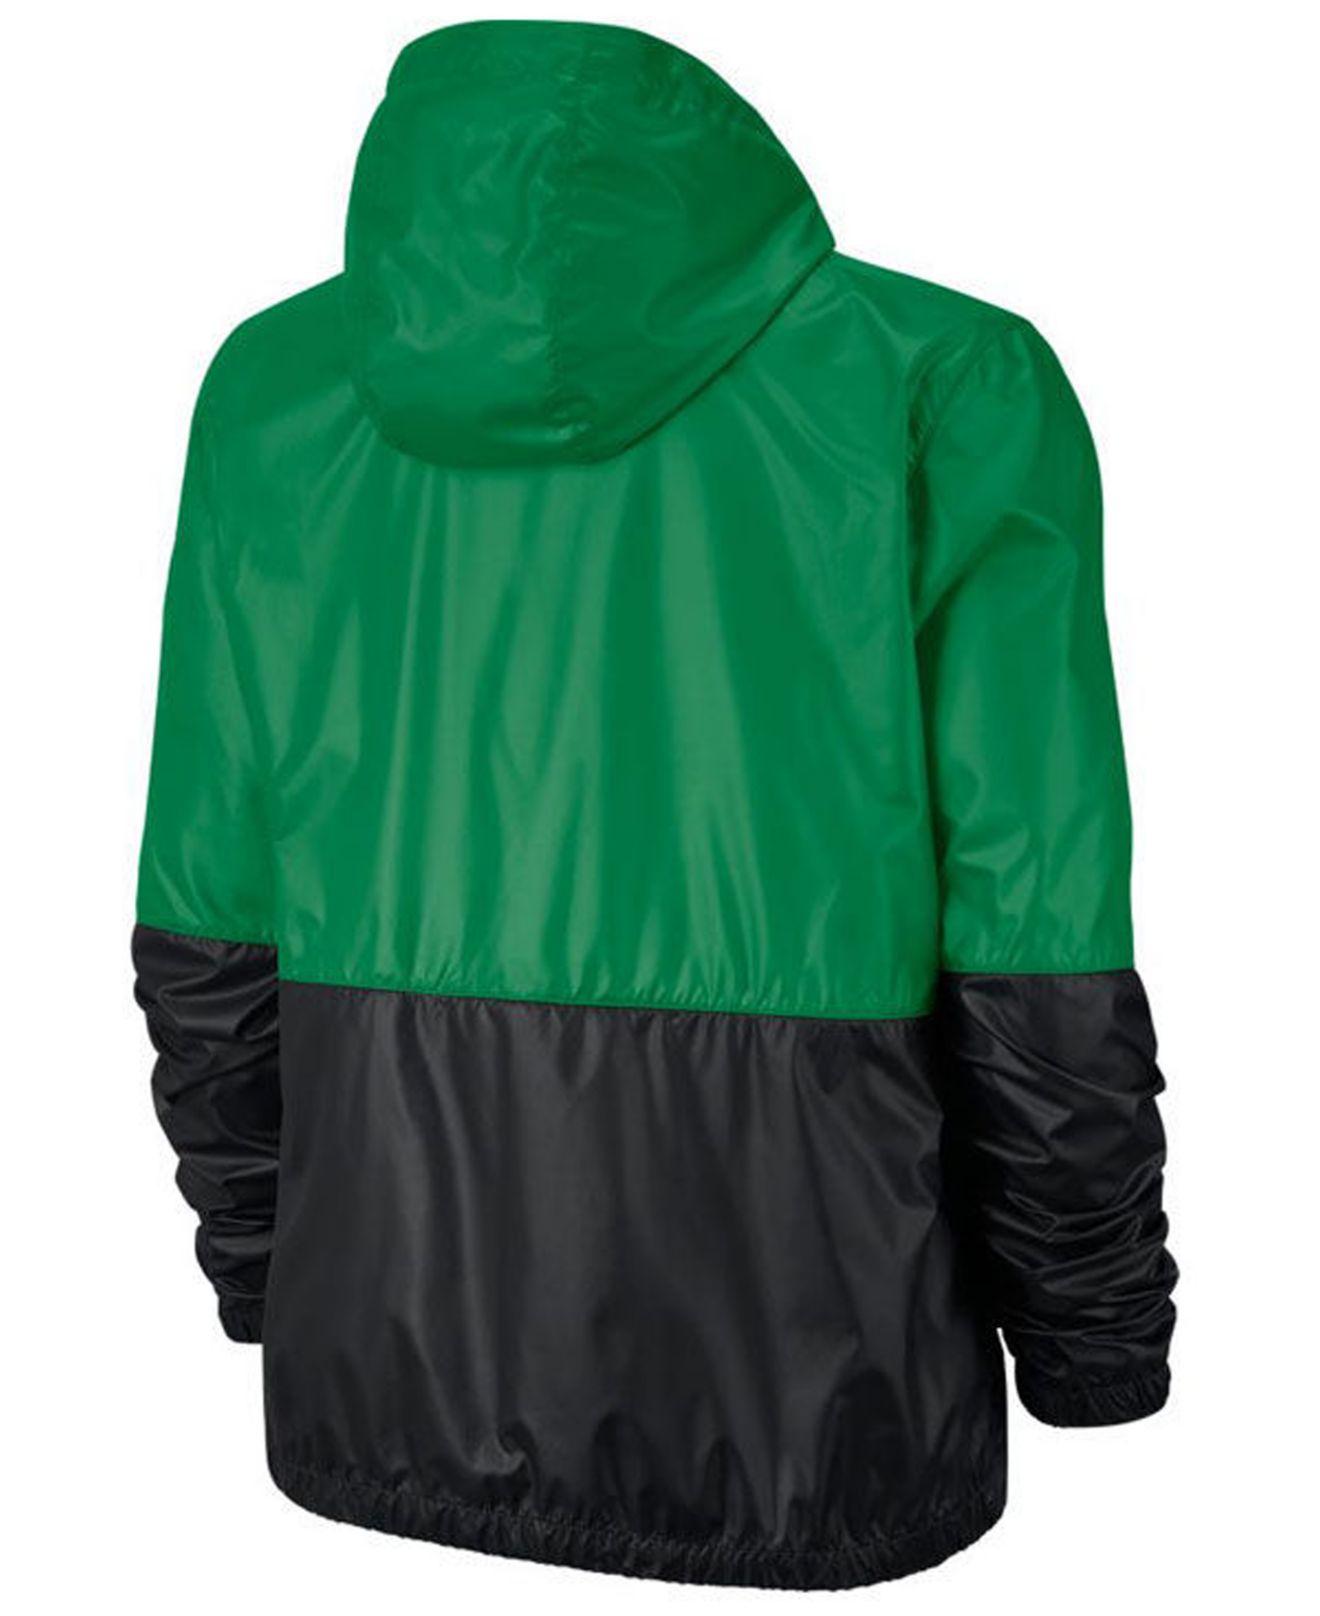 green and black nike jacket